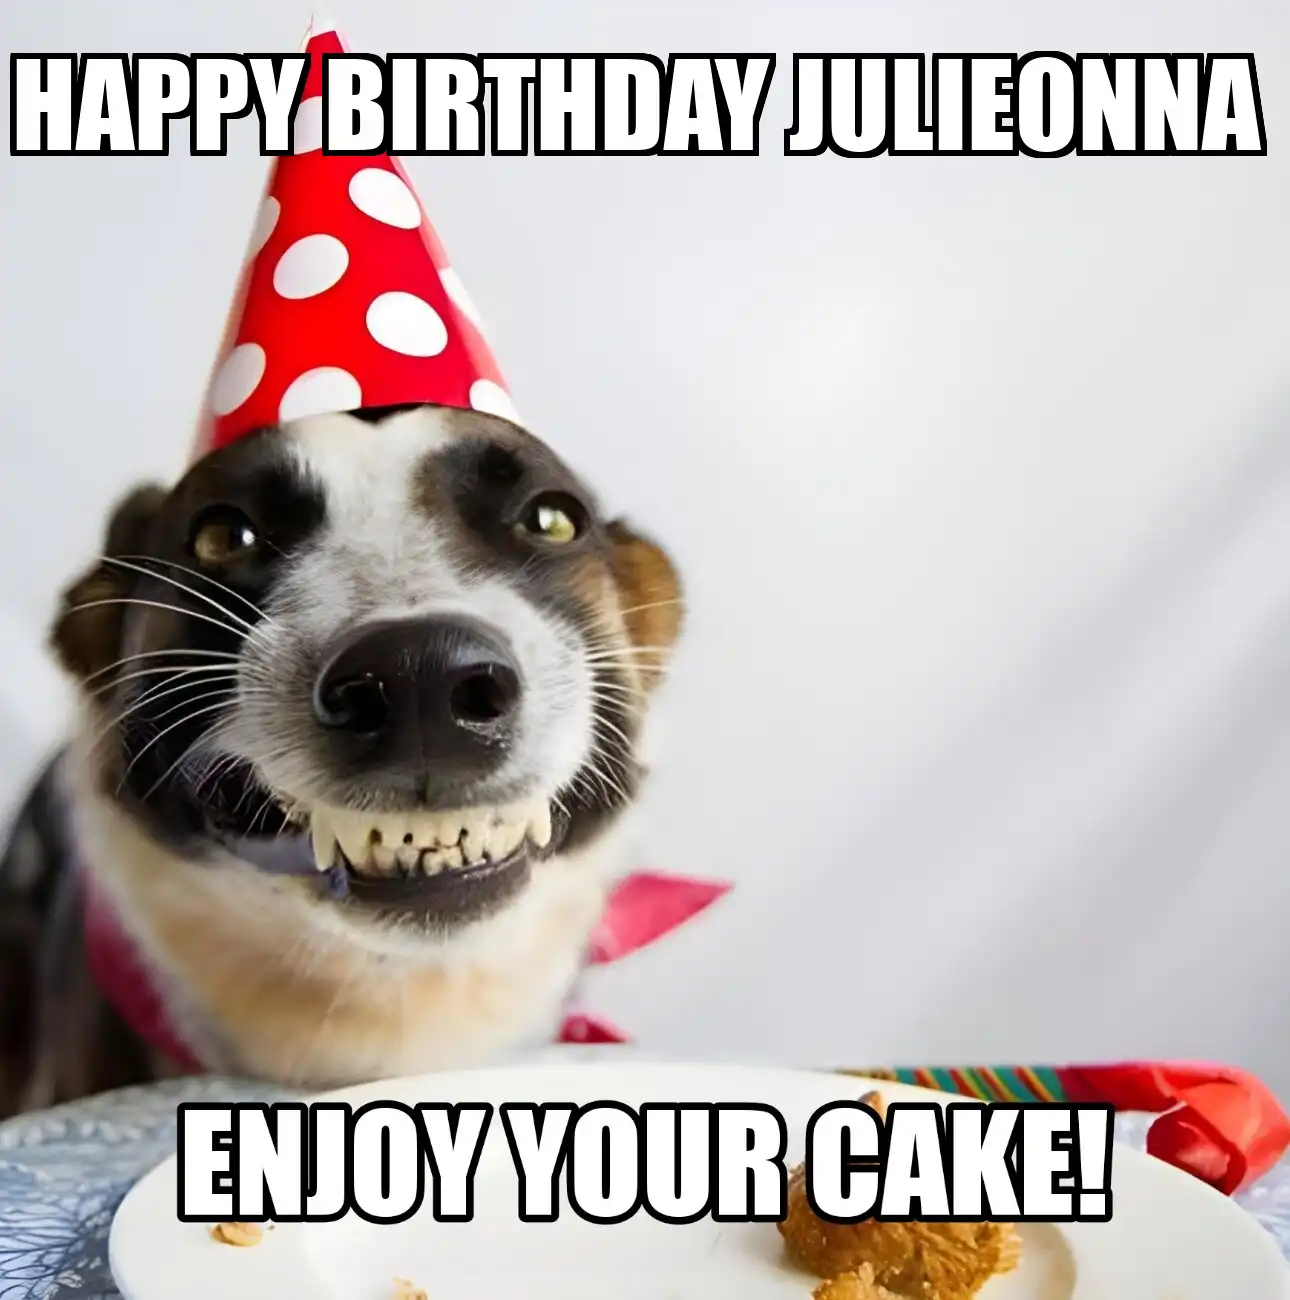 Happy Birthday Julieonna Enjoy Your Cake Dog Meme